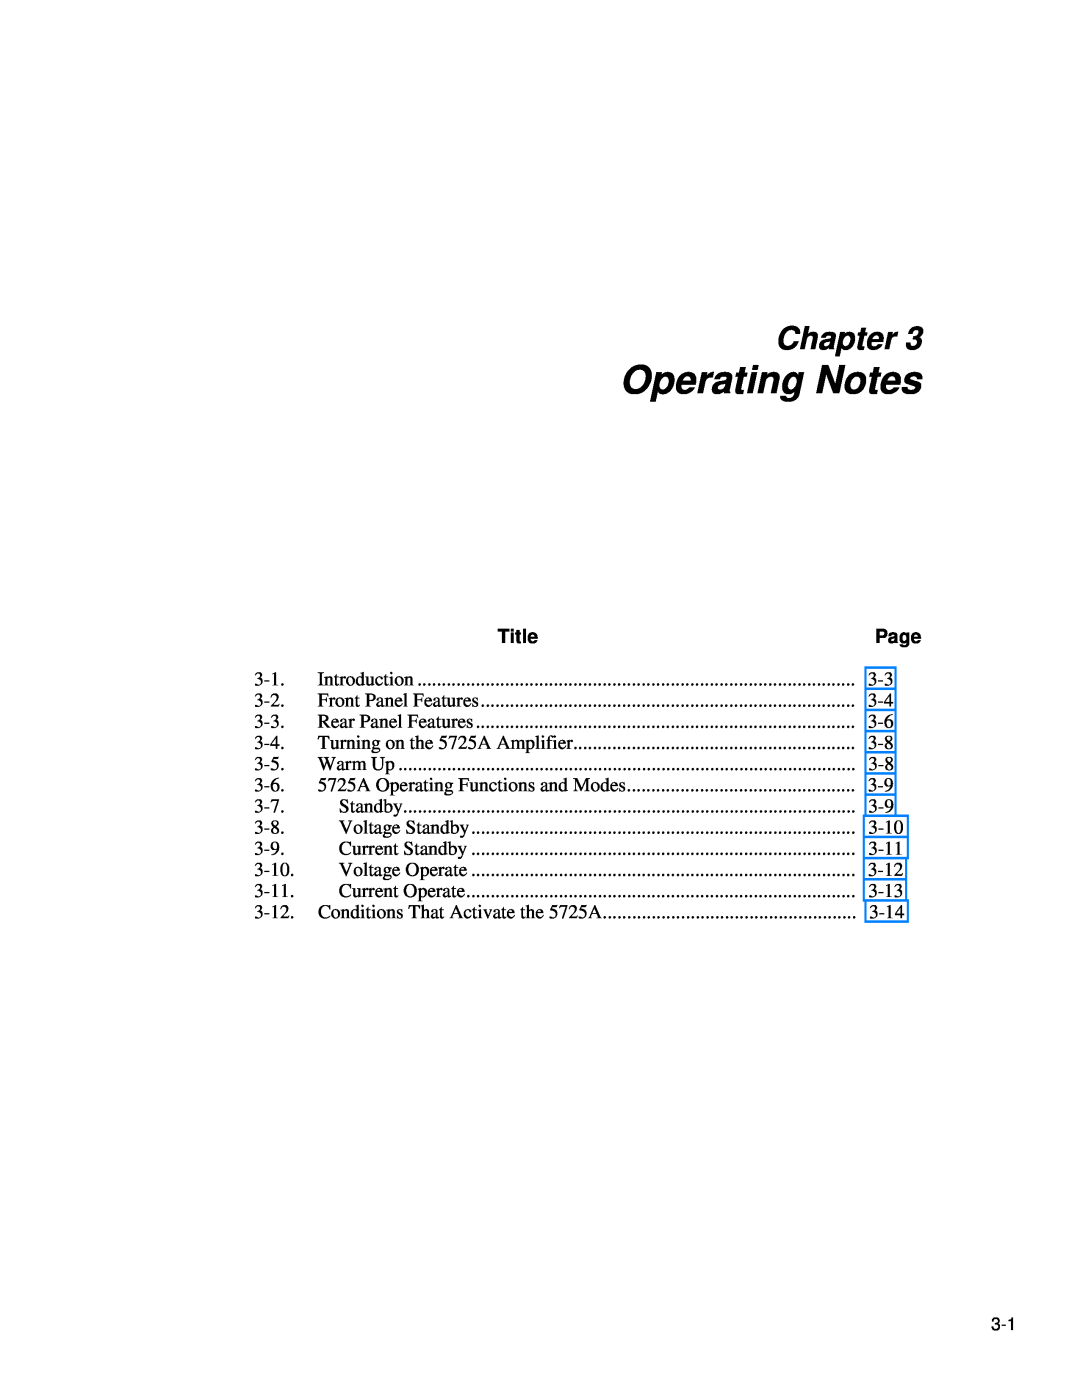 Fluke 5725A instruction manual Operating Notes, Chapter 